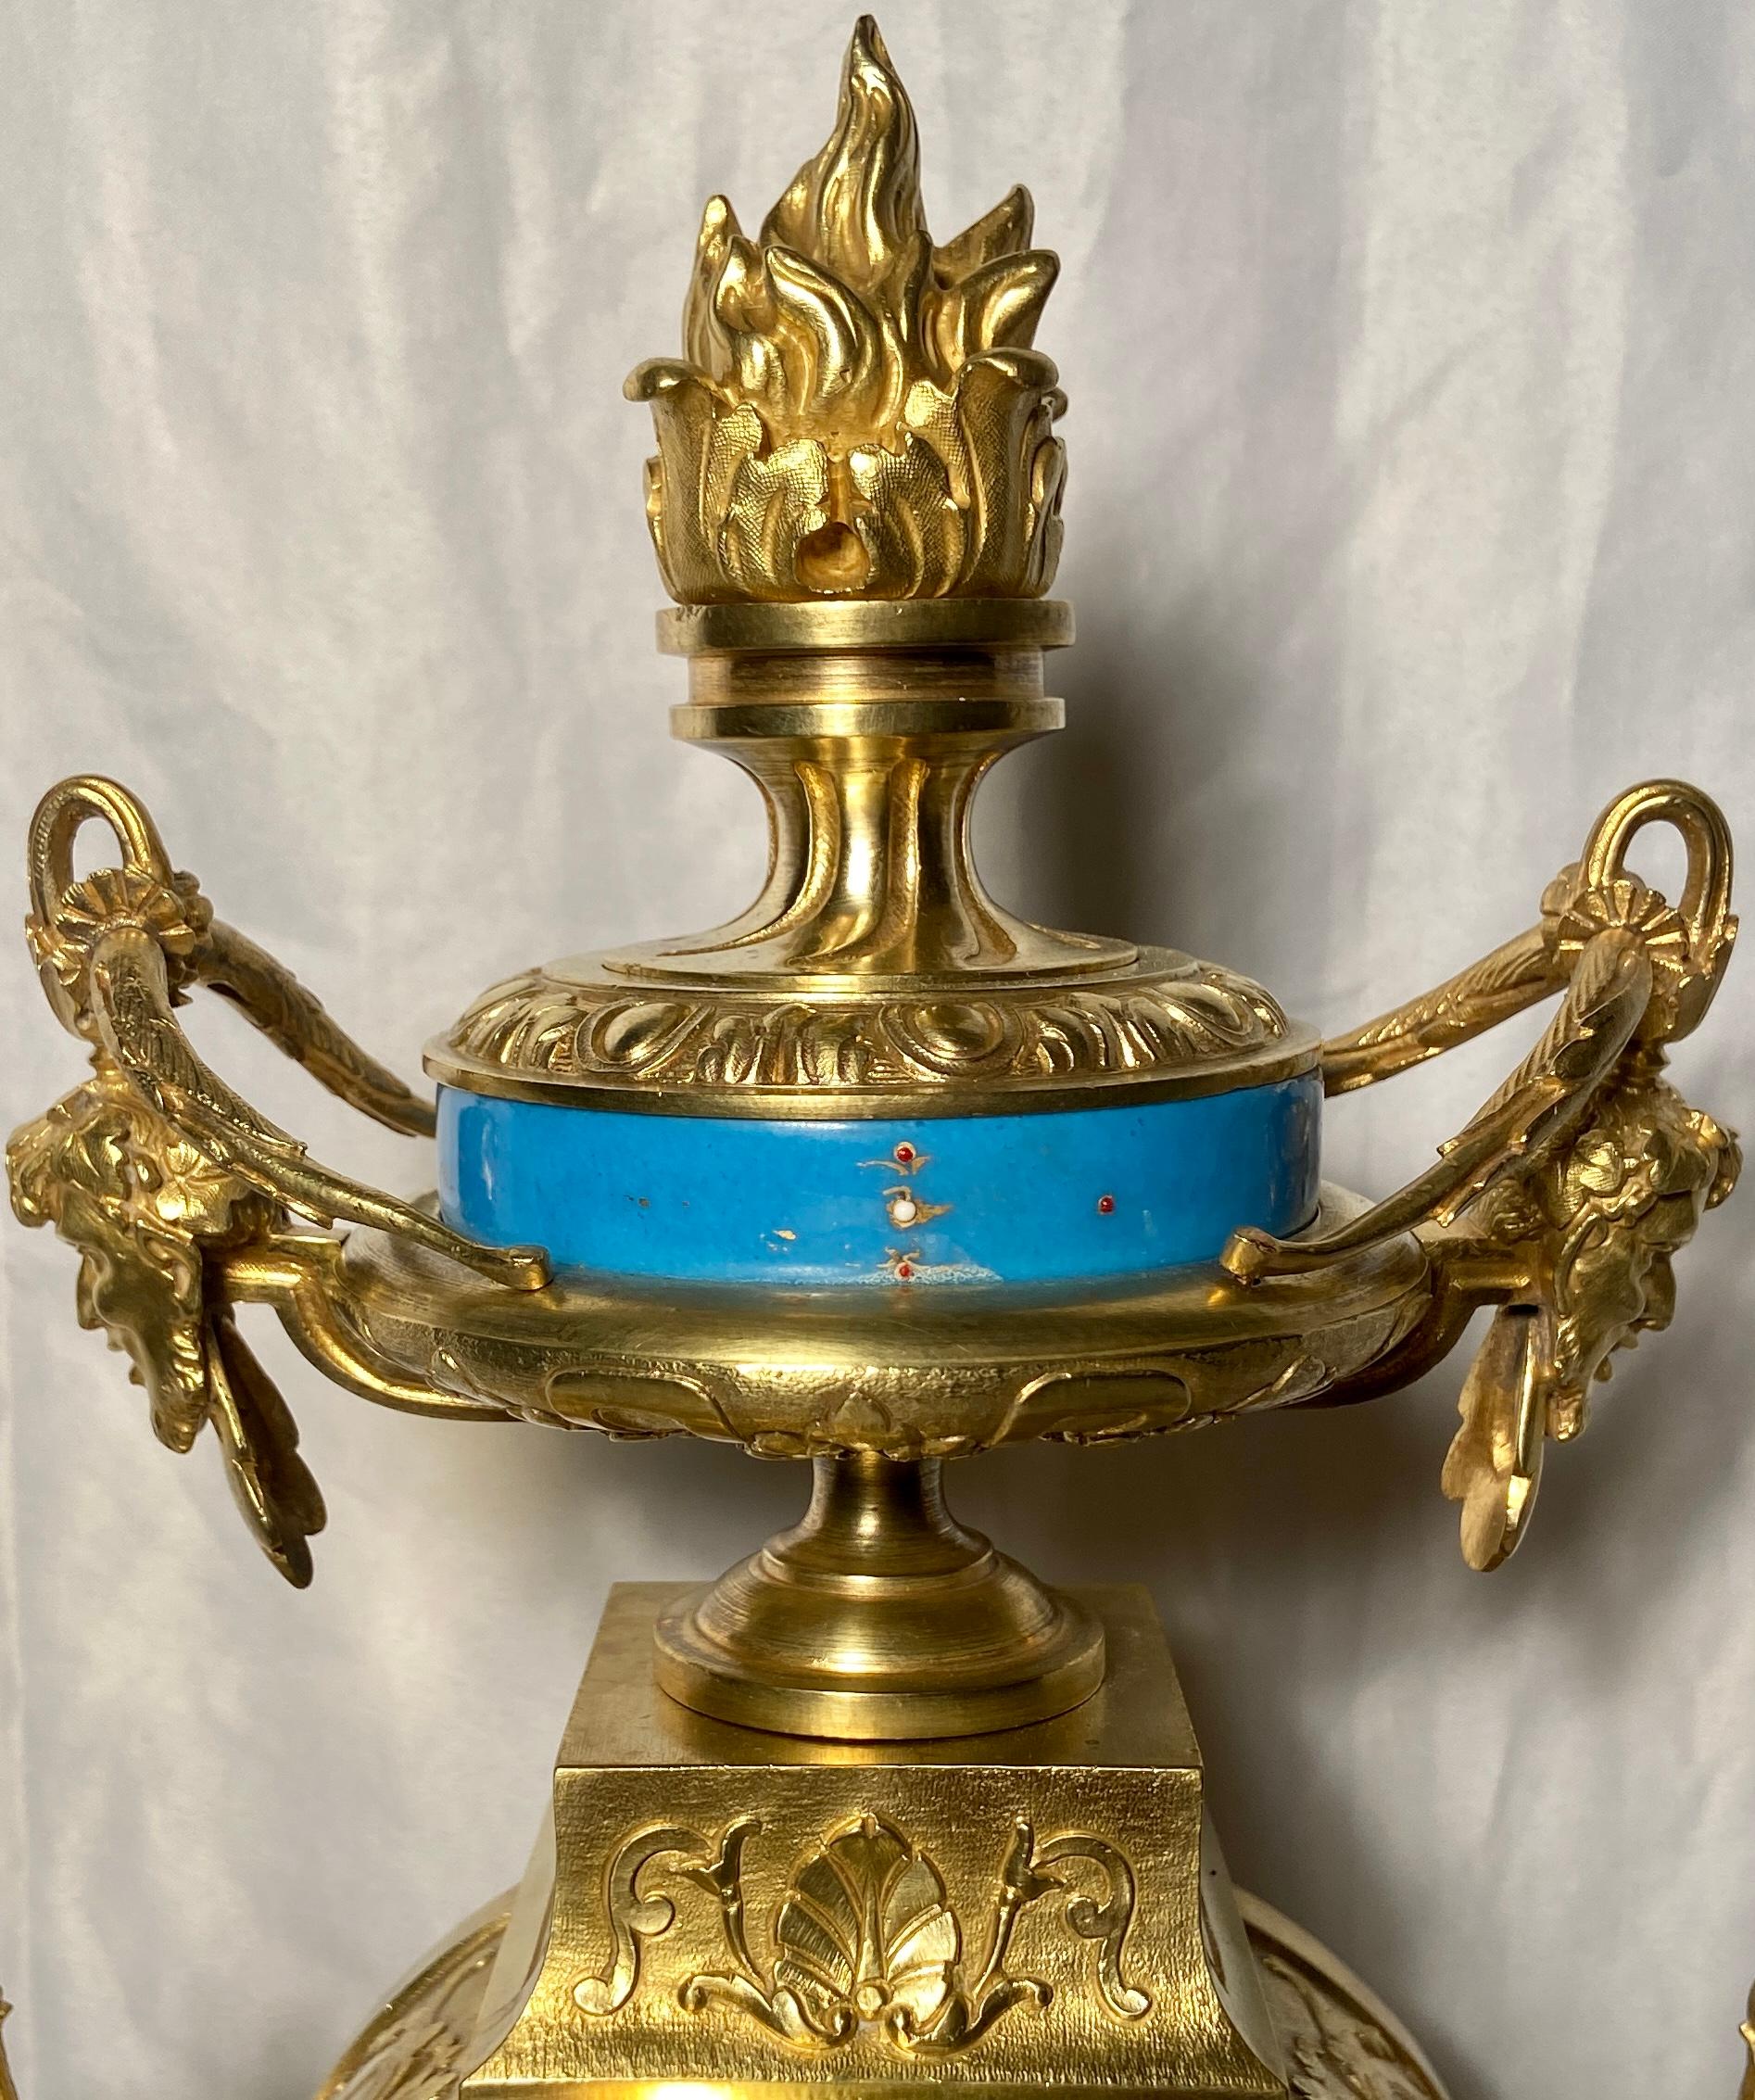 19th Century Antique French Louis XVI Blue Sèvres Porcelain and Ormolu Clock, Circa 1875-85 For Sale